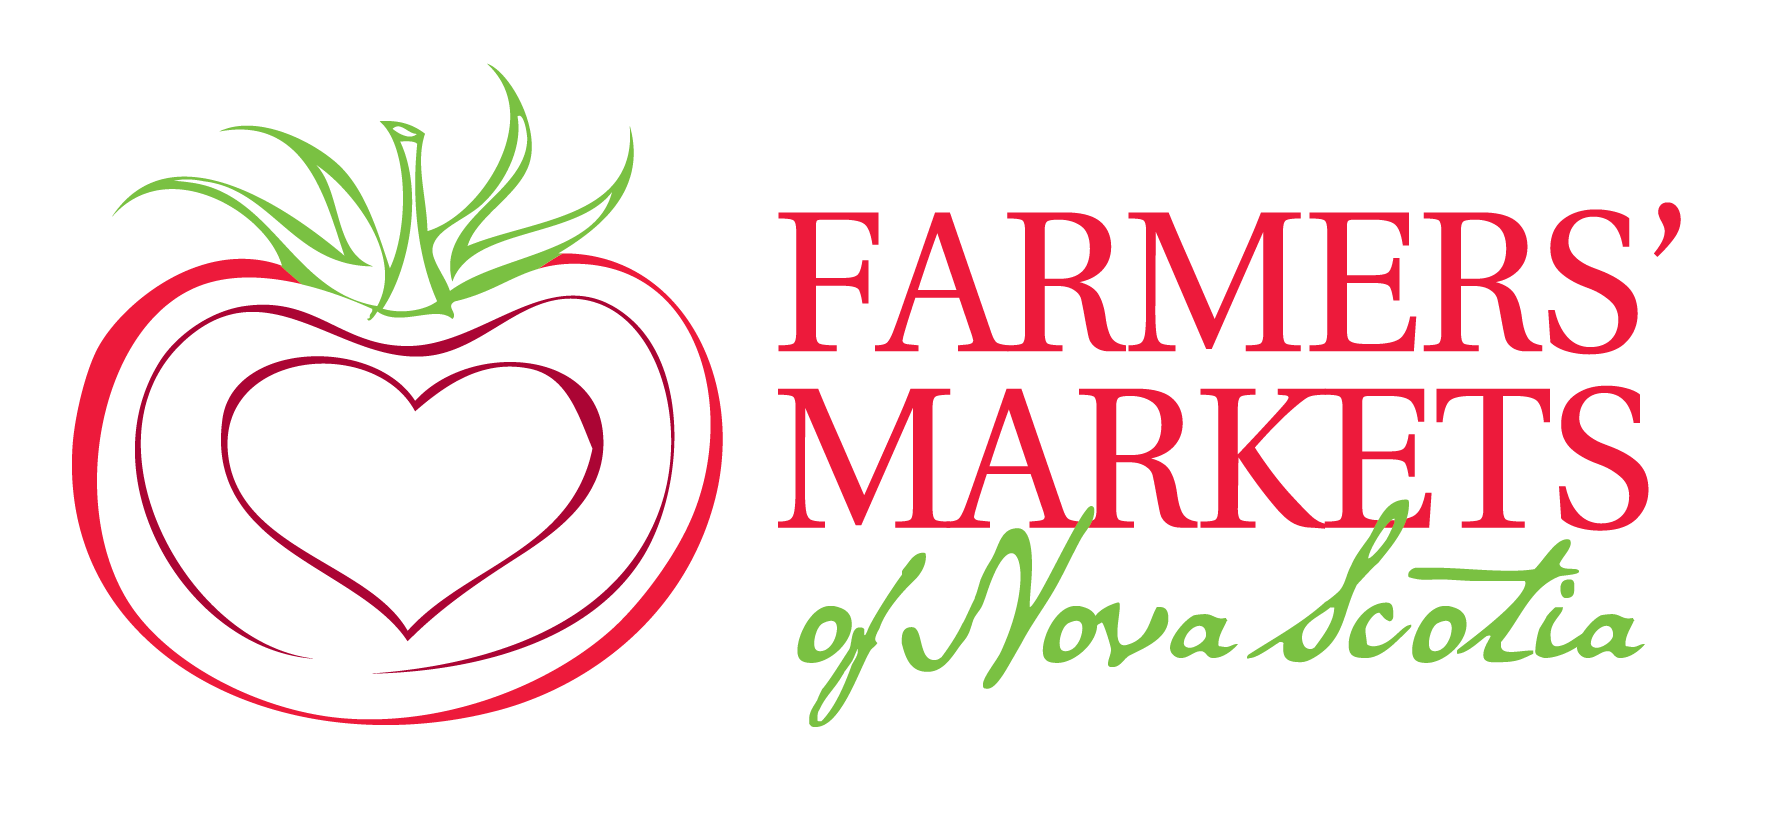 Farmers' Markets of Nova Scotia Logo